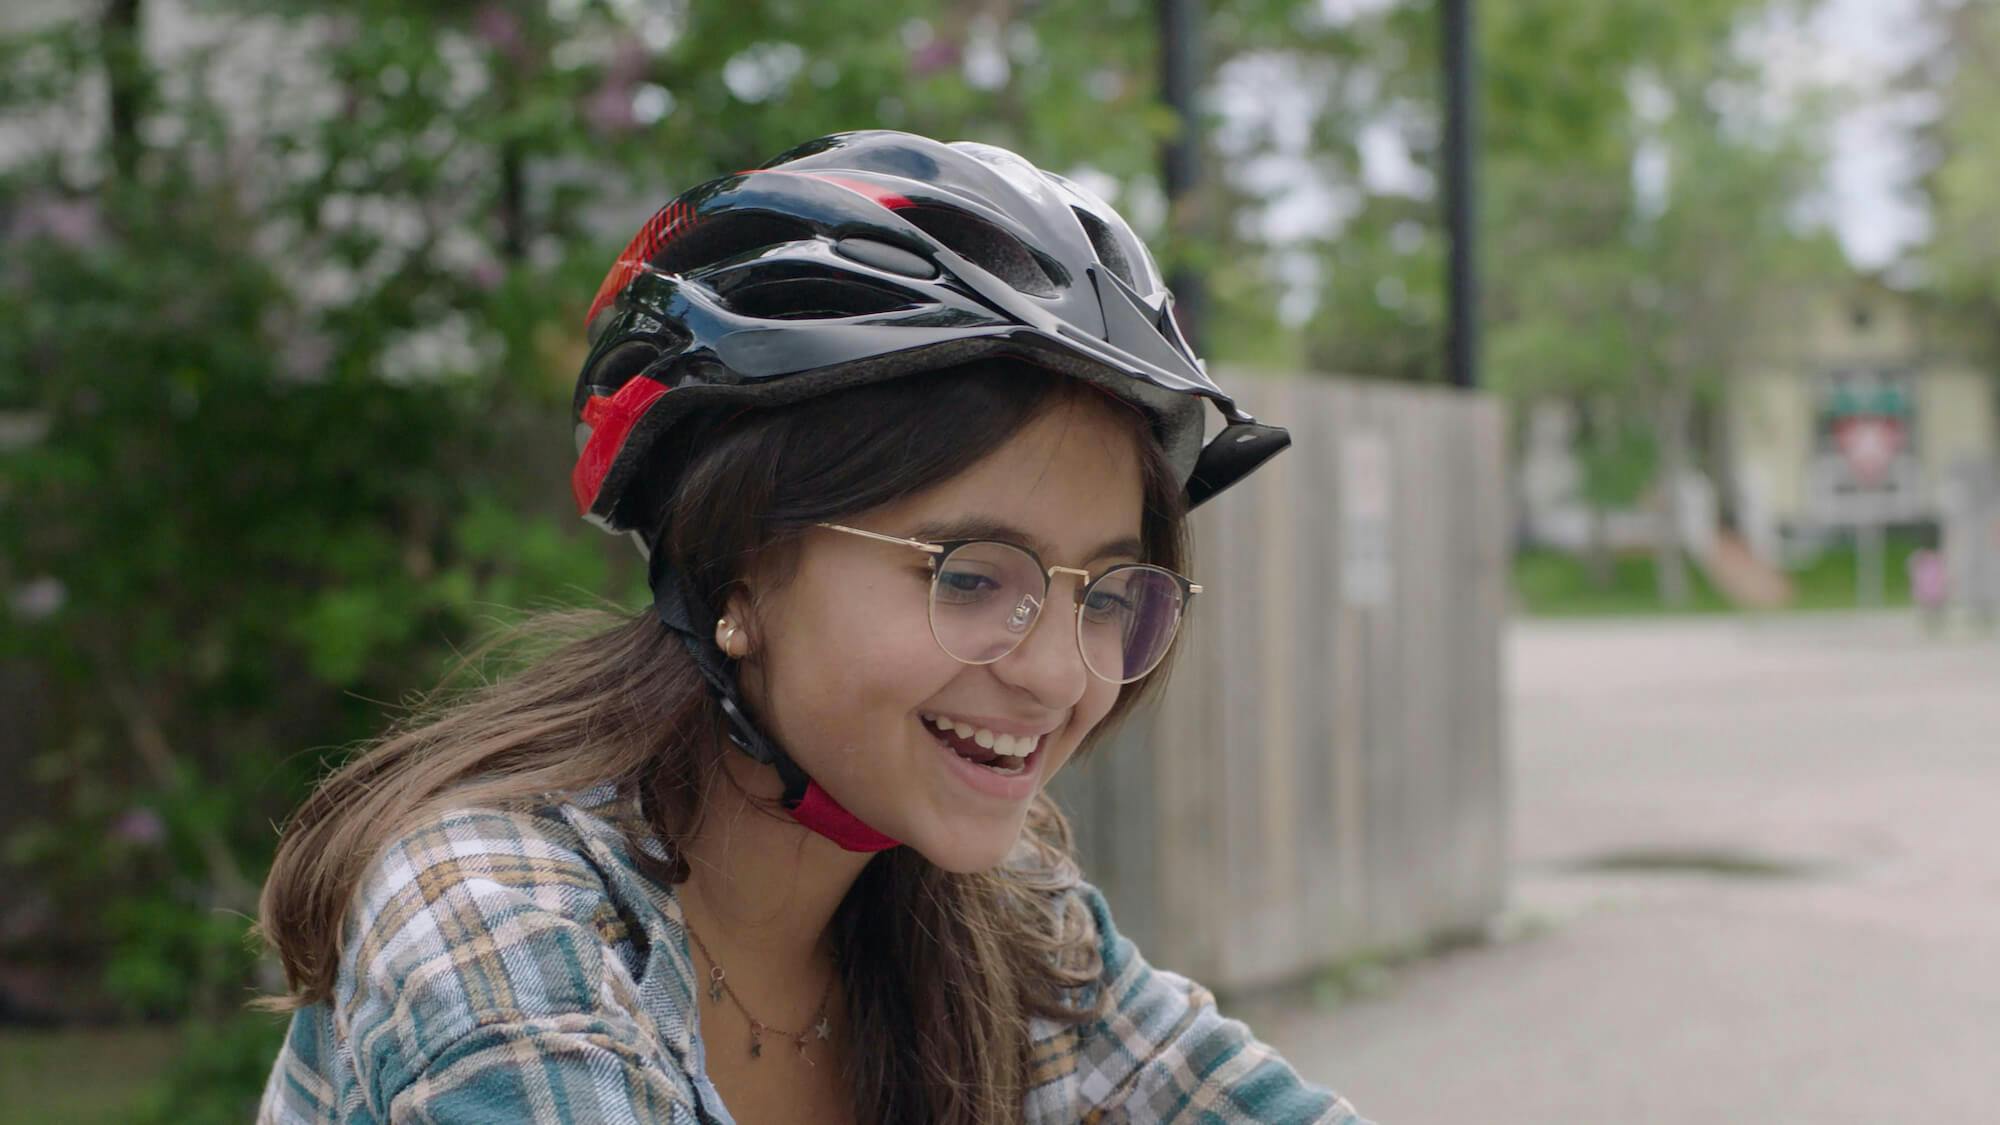 A girl wearing a bike helmet smiles.